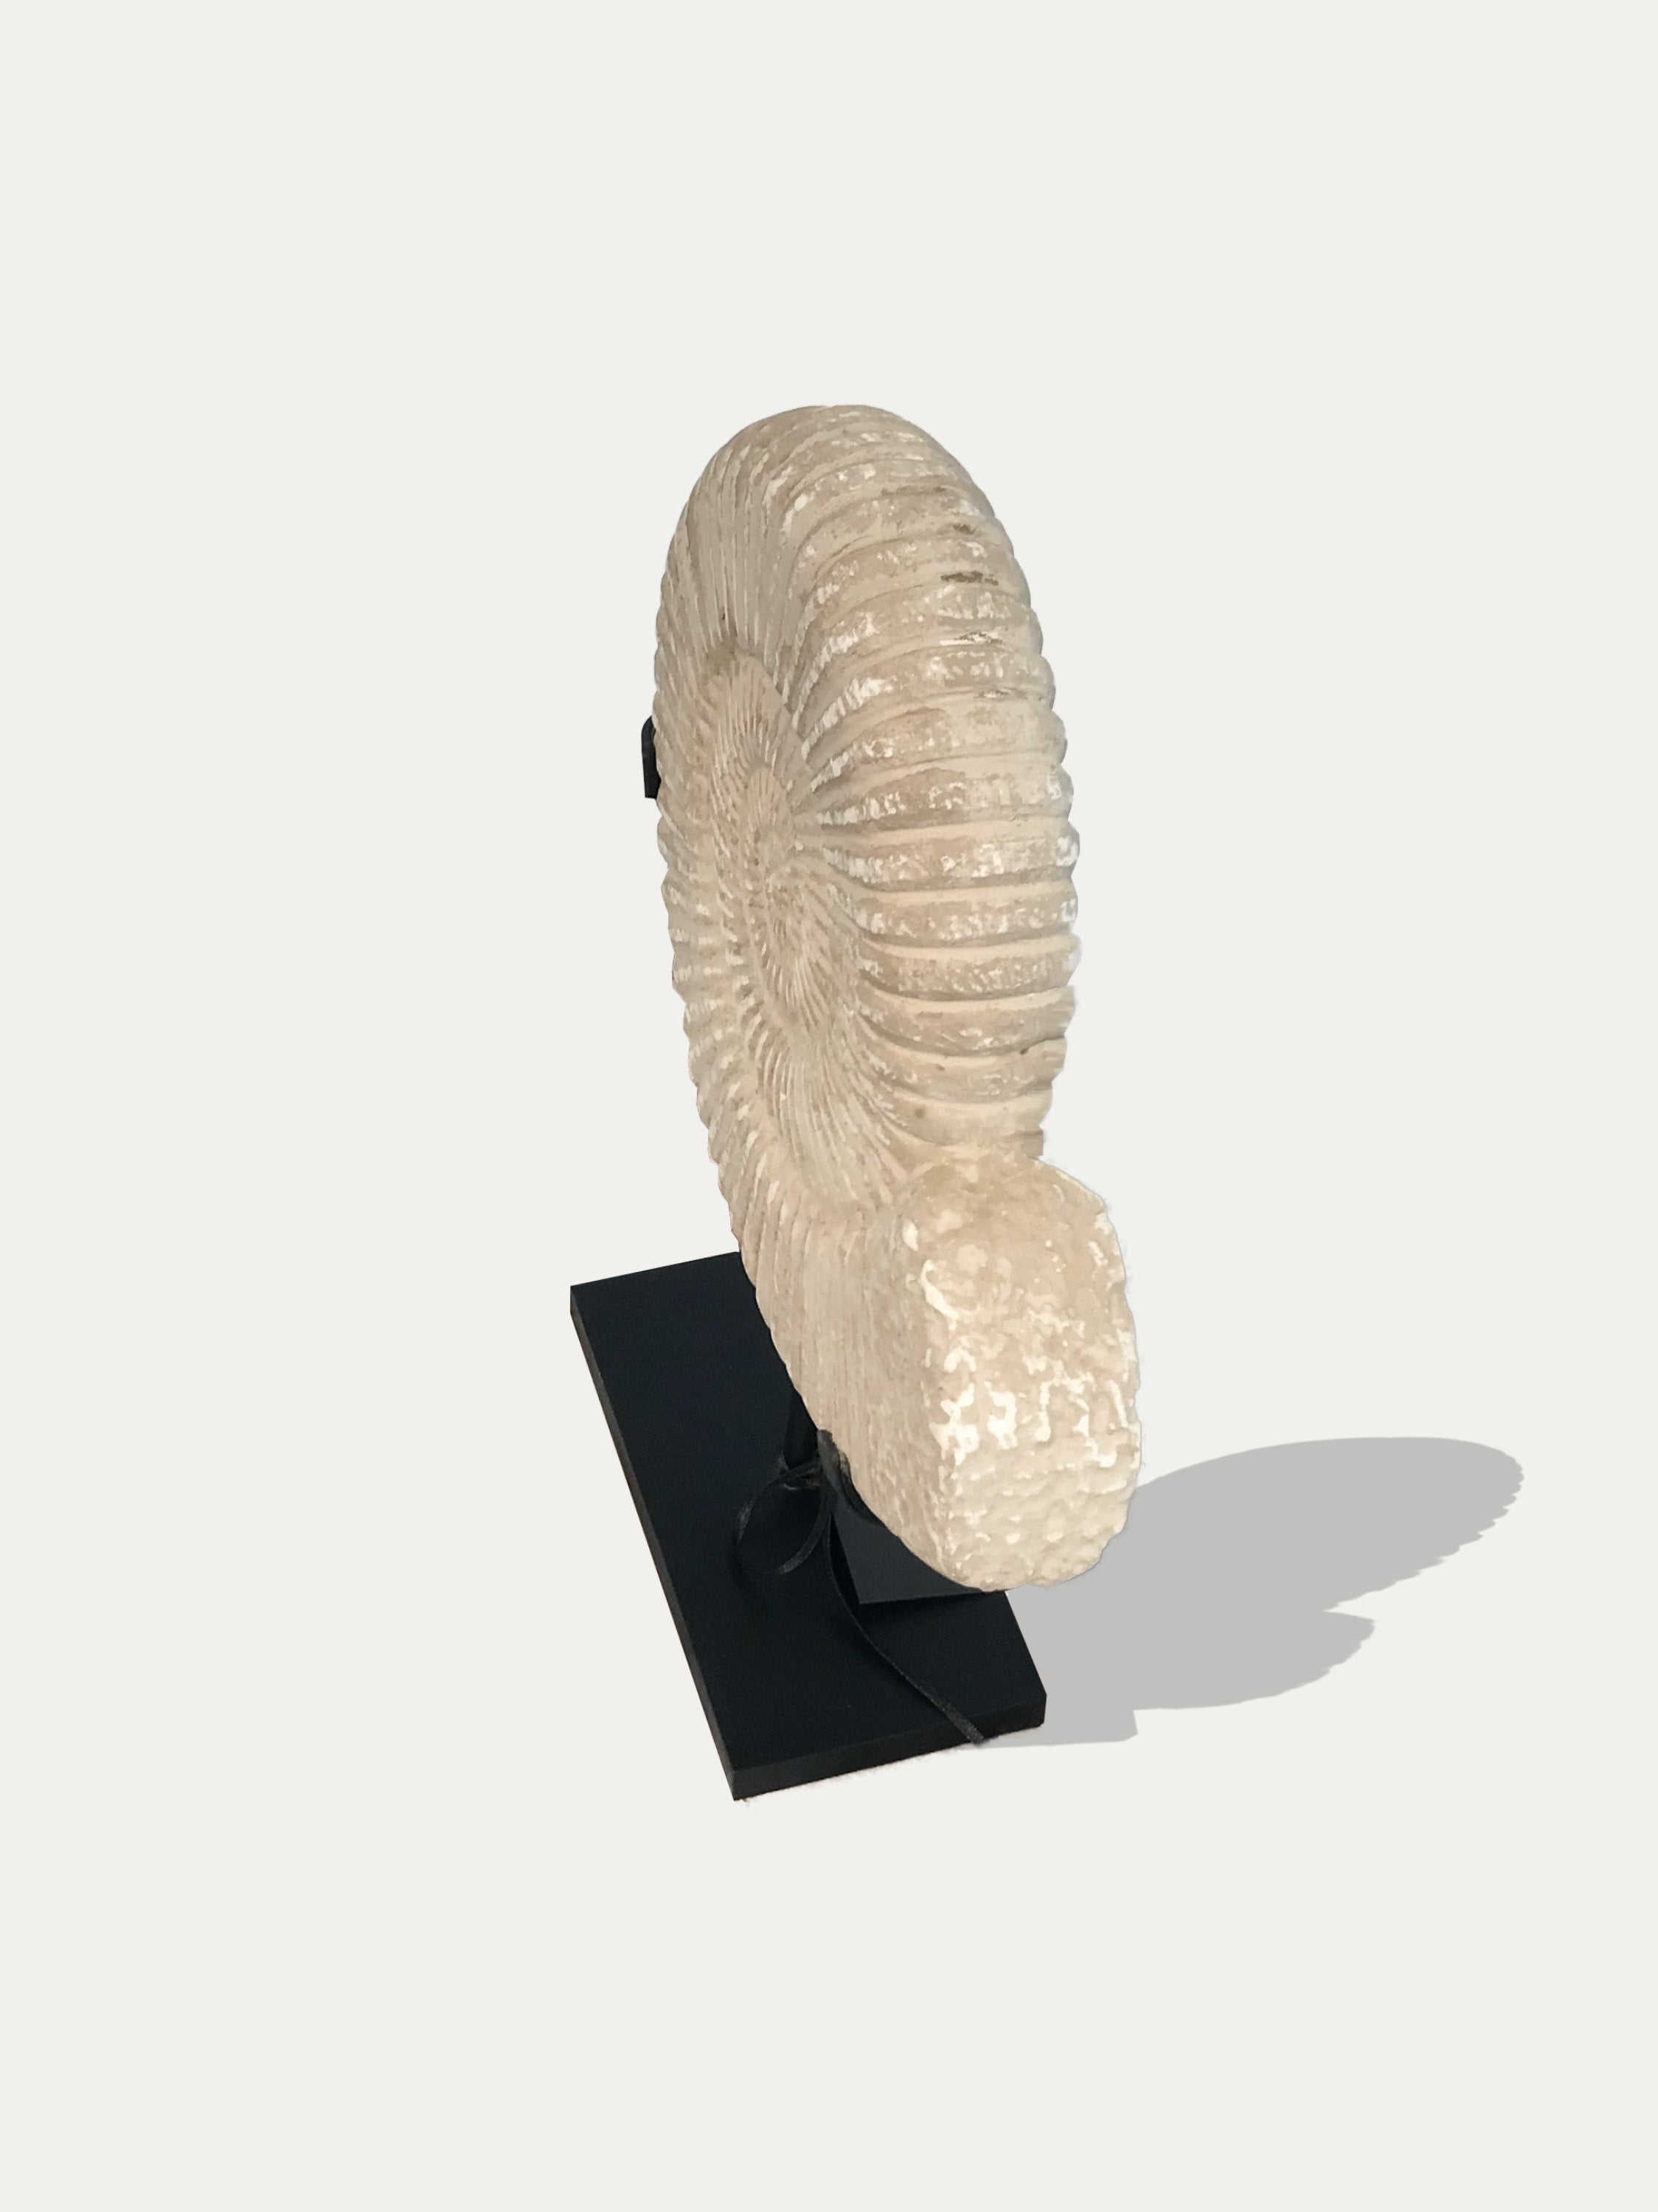 Ammonite stone statue. Asian art from Kirschon.com